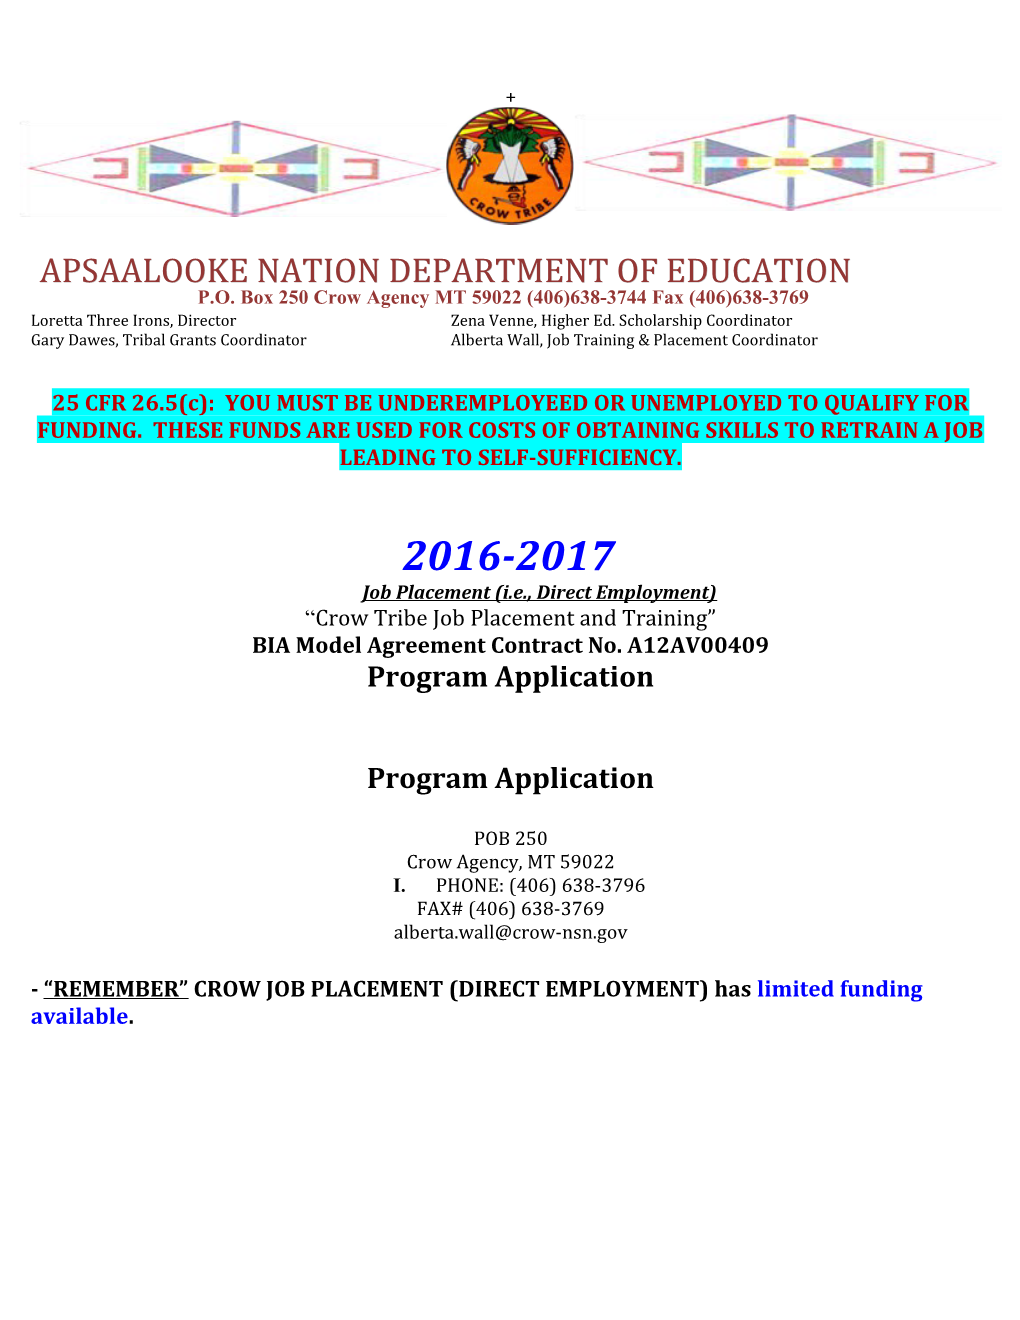 Apsaalooke Nation Education Department